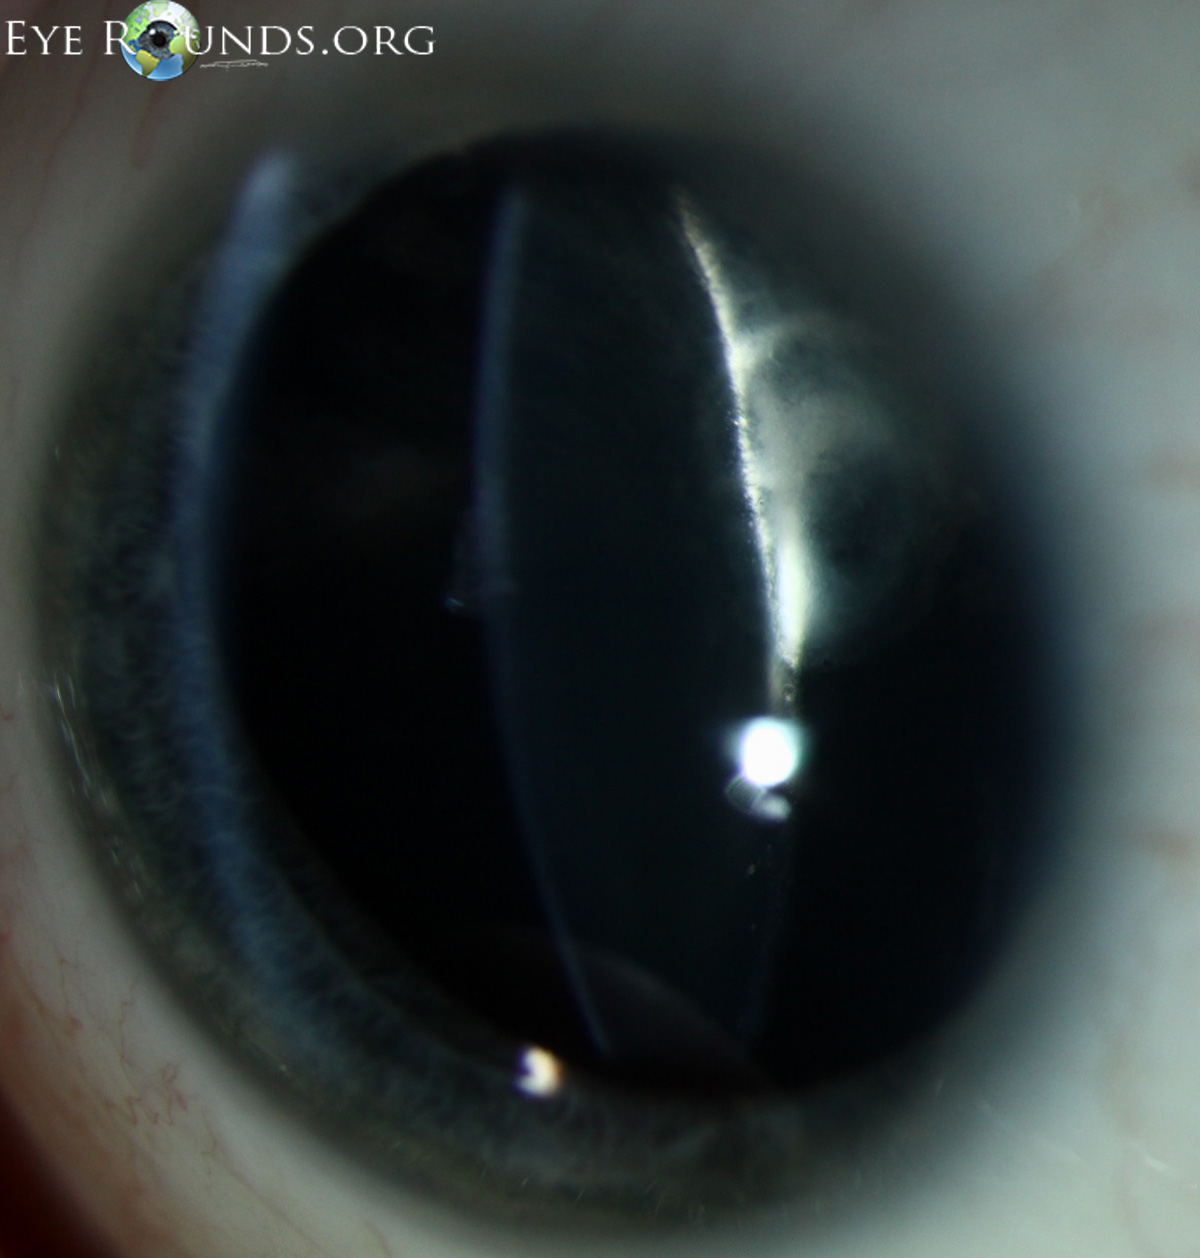 bilateral Posterior polar cataracts upclose